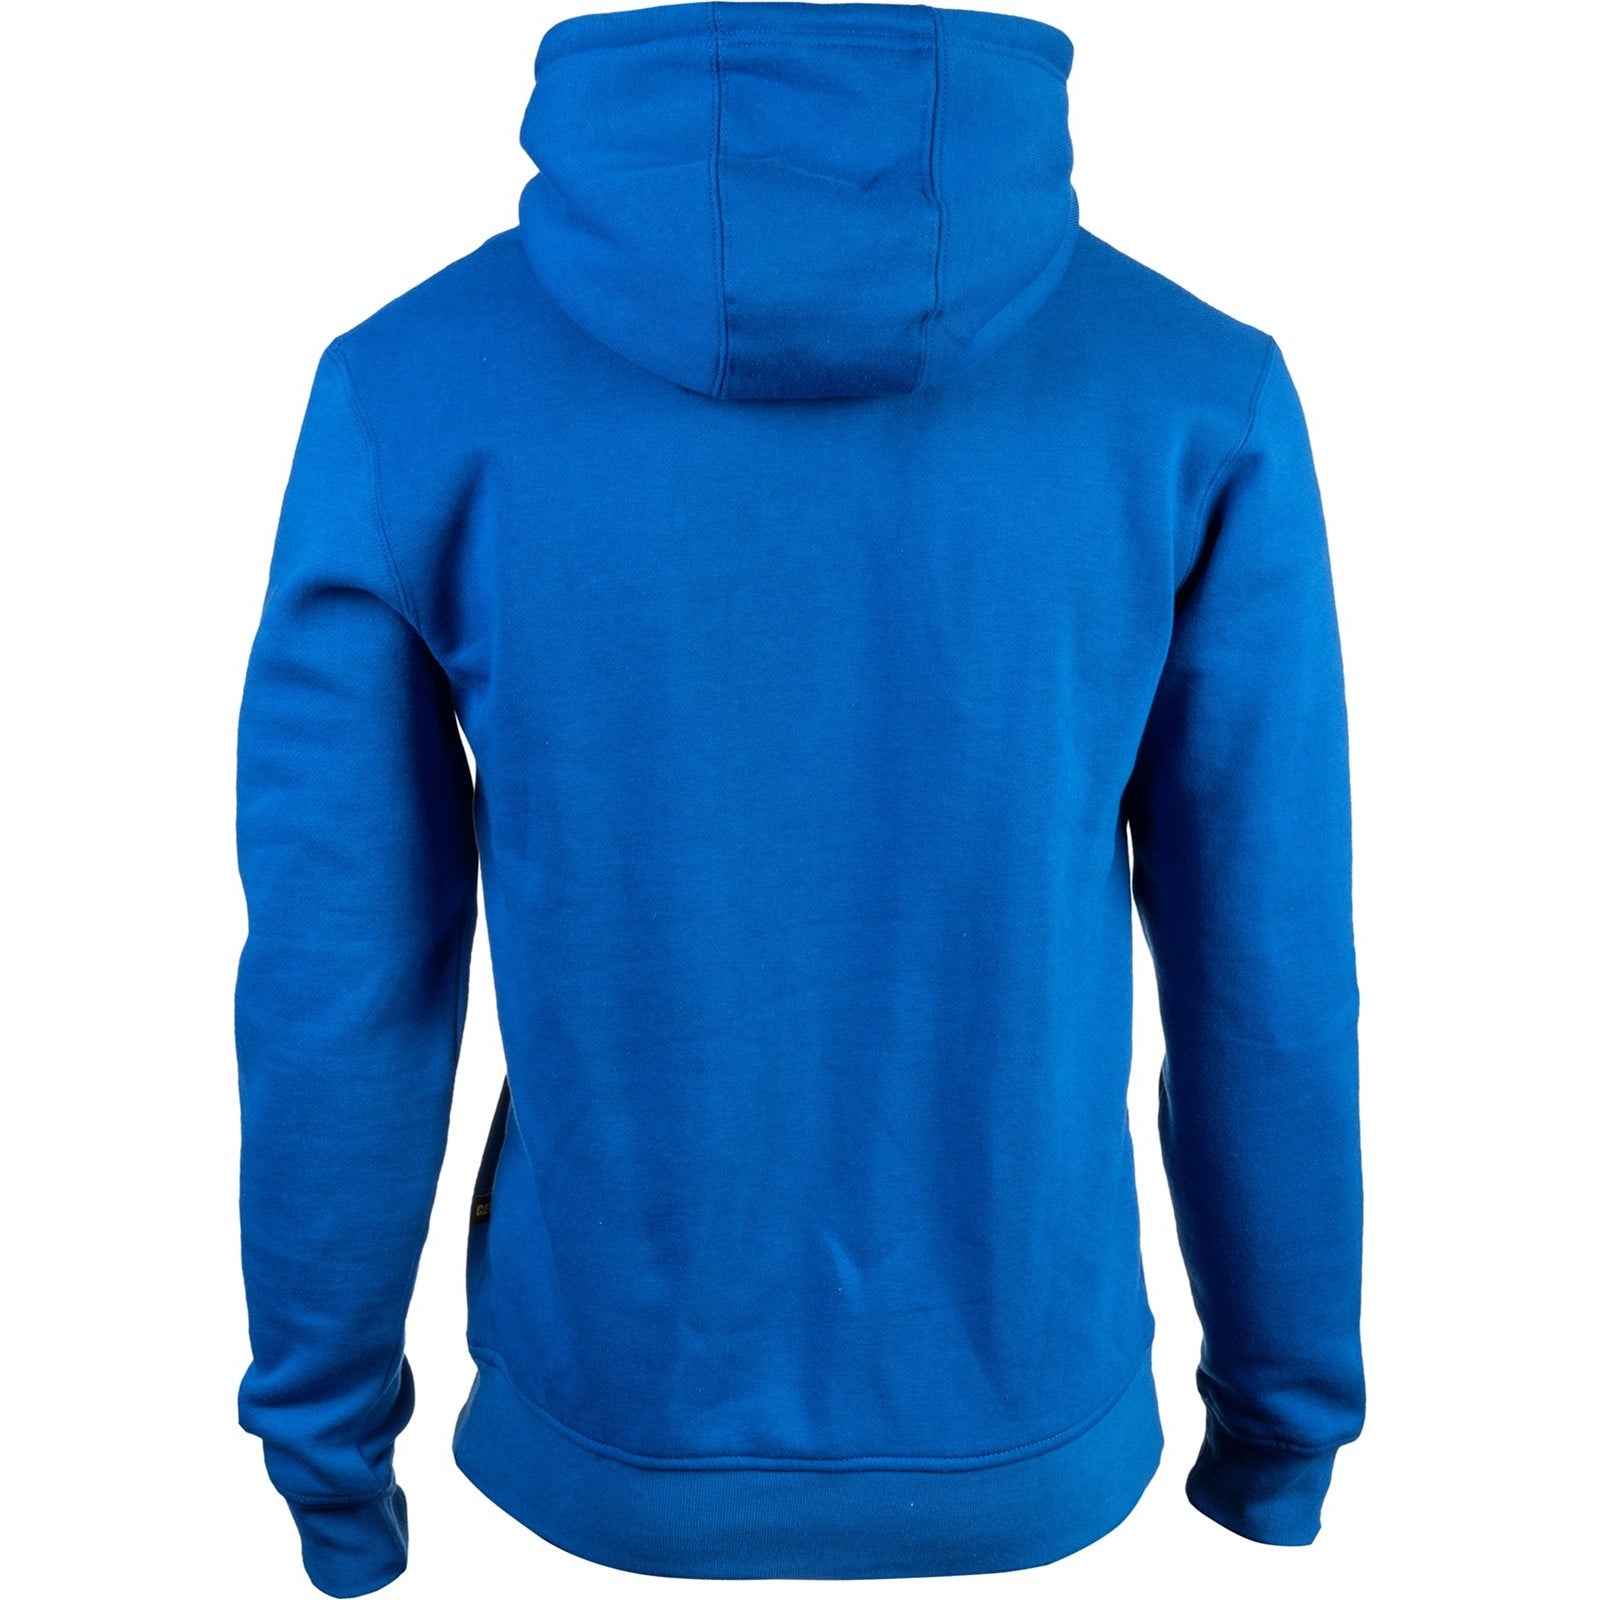 Caterpillar Trademark Hooded Sweatshirt in Memphis Blue